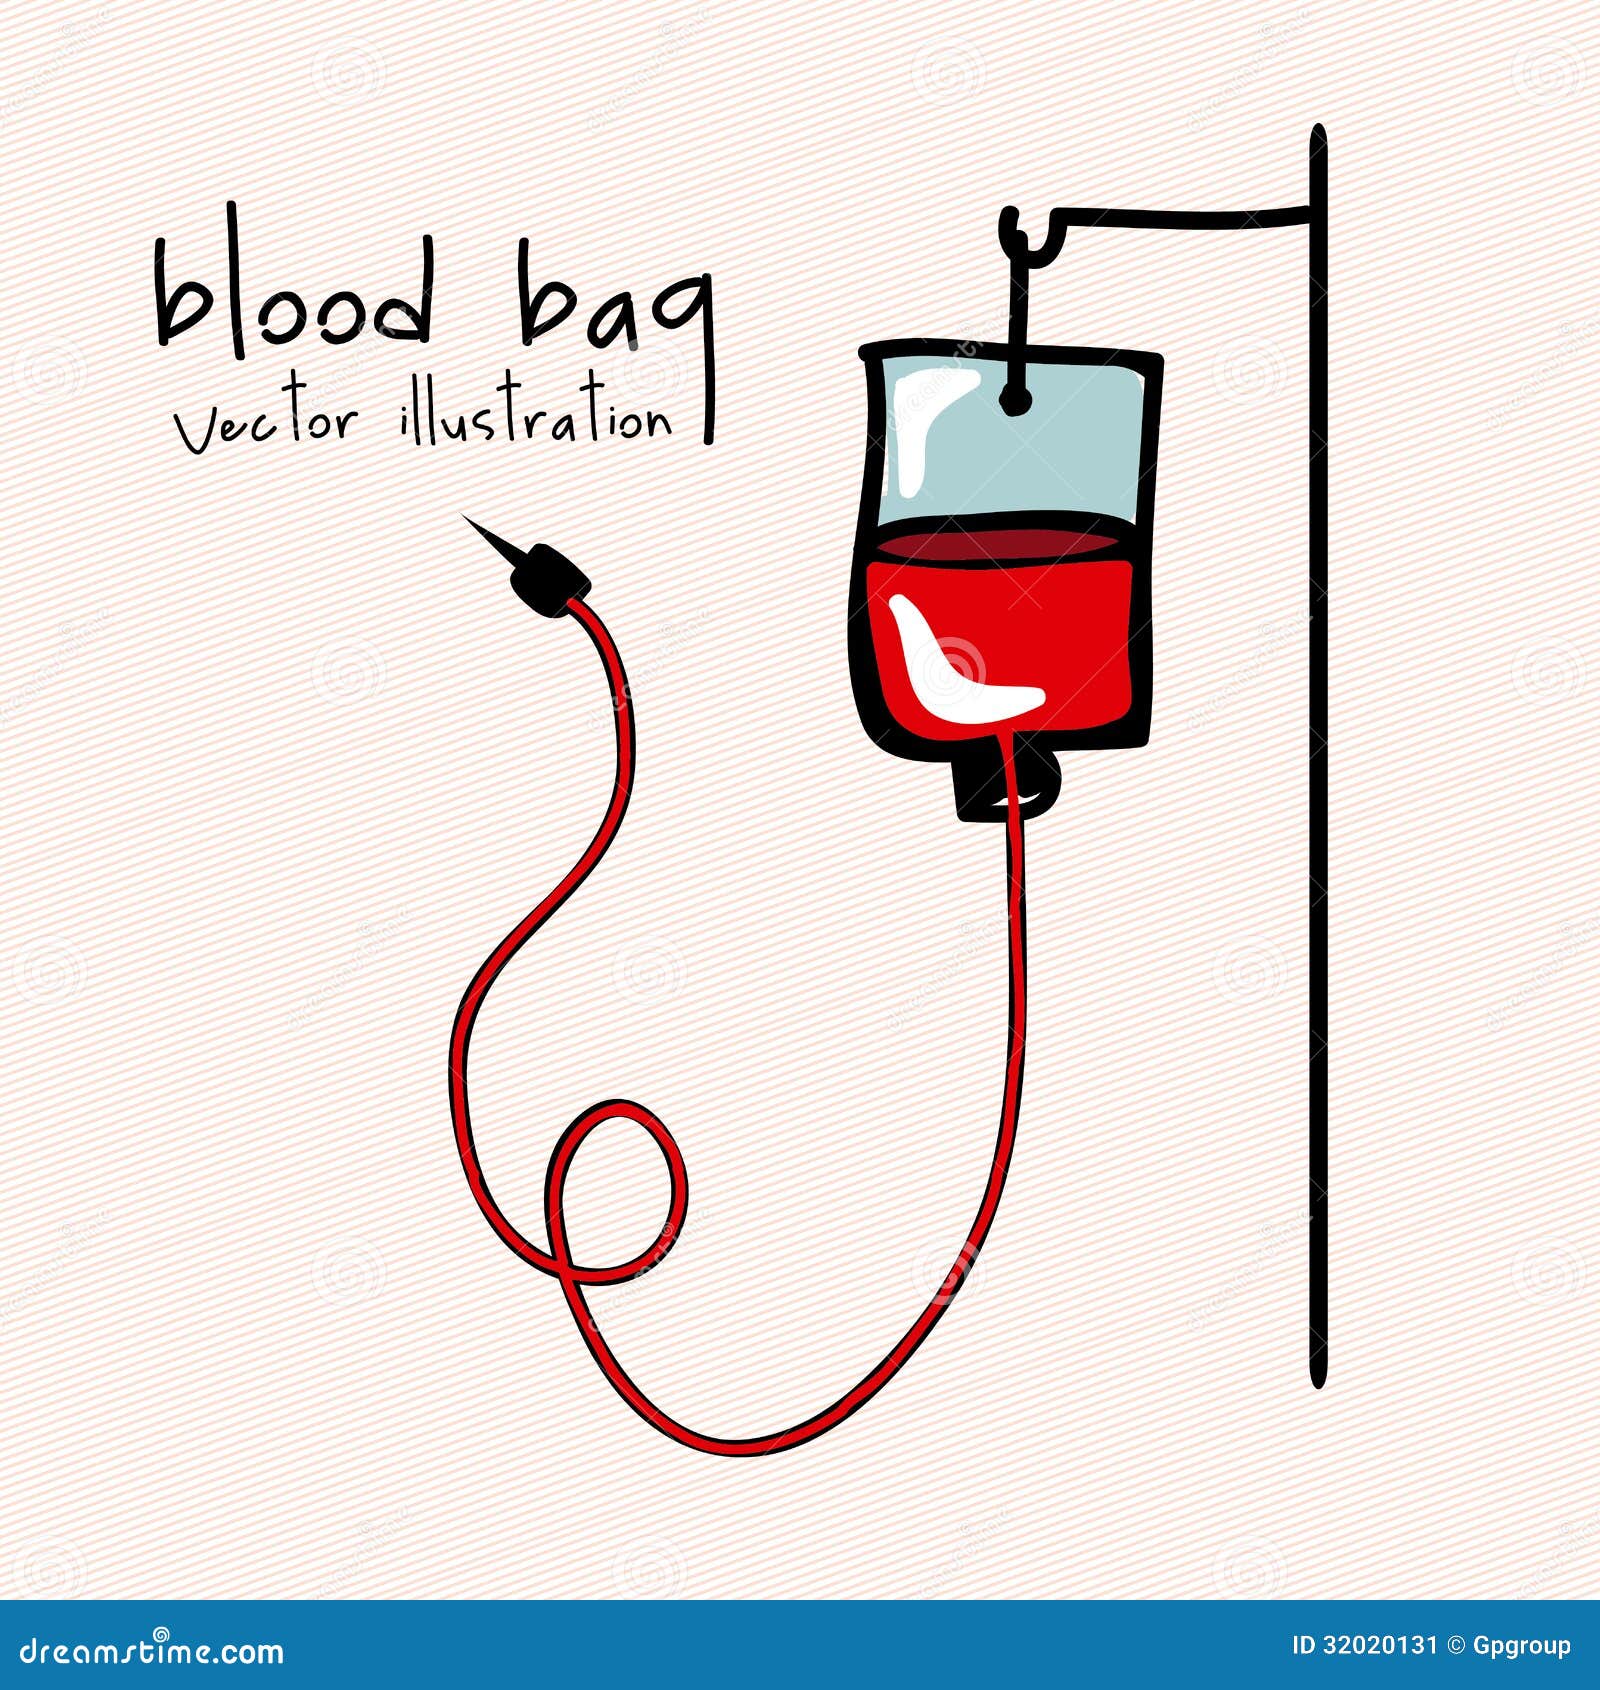 blood bag clip art - photo #40